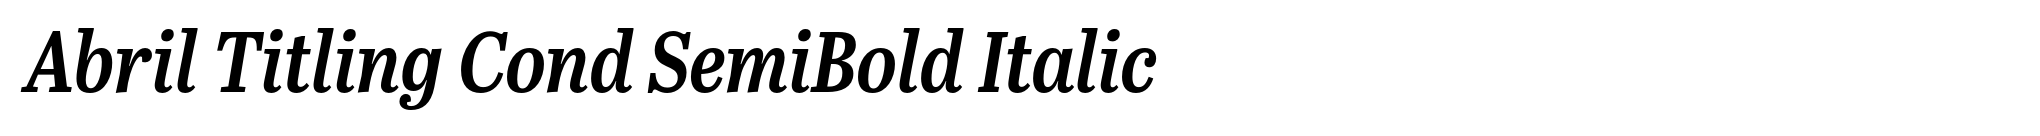 Abril Titling Cond SemiBold Italic image